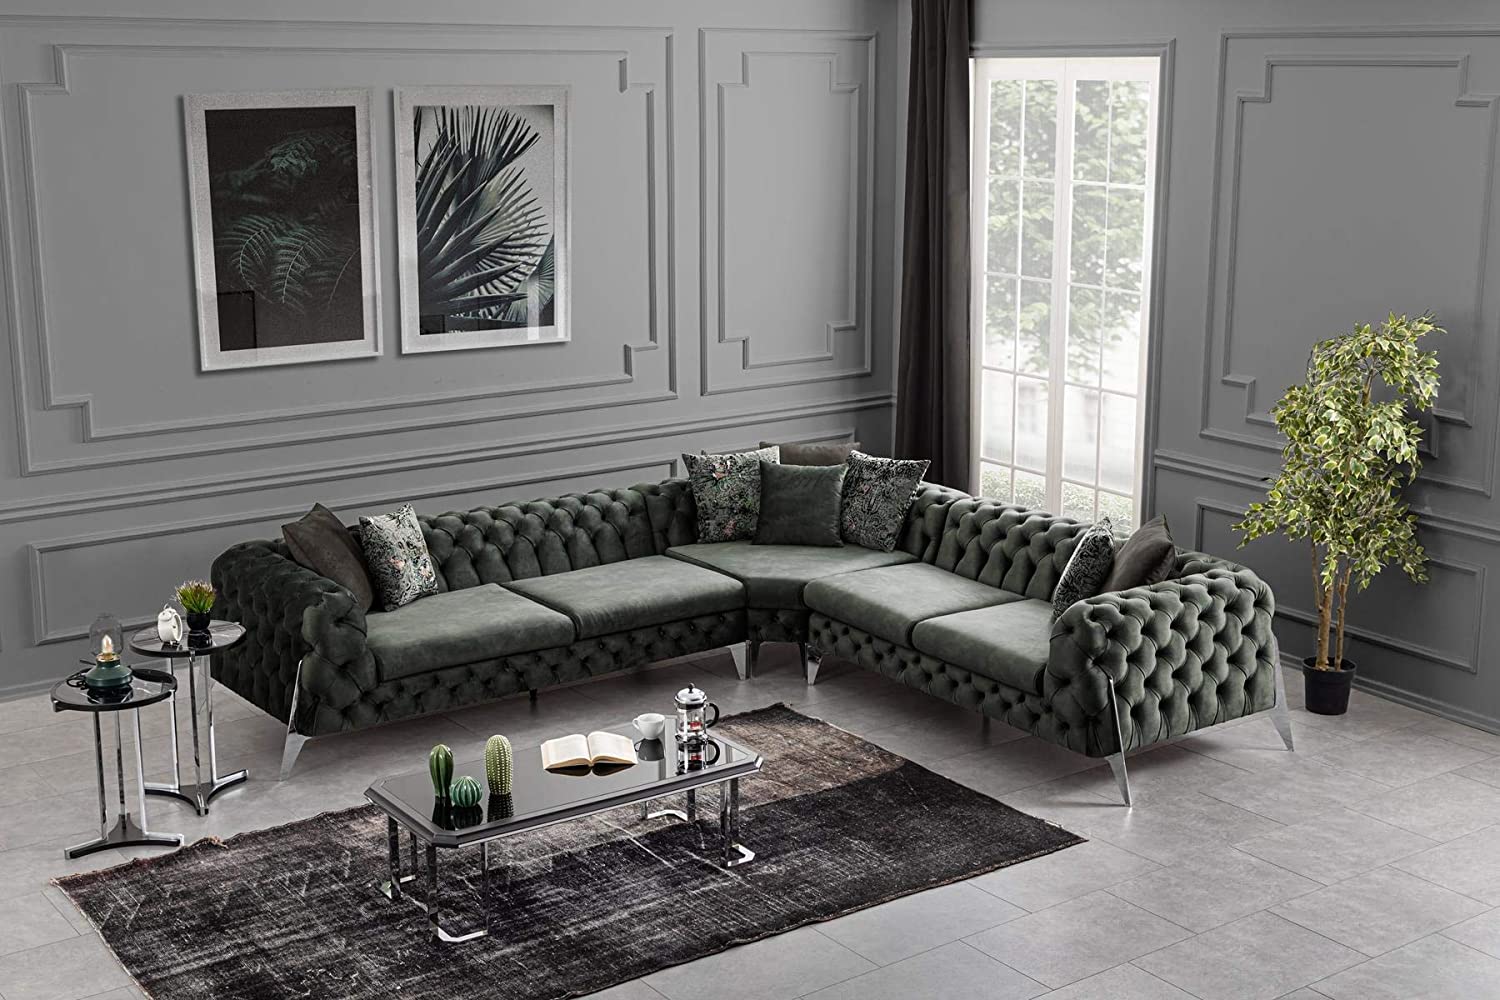 Designer Sofa Set:- Liberty L Shape Suede Fabric 6 Seater Luxury Furniture Sofa Set (Olive Green)